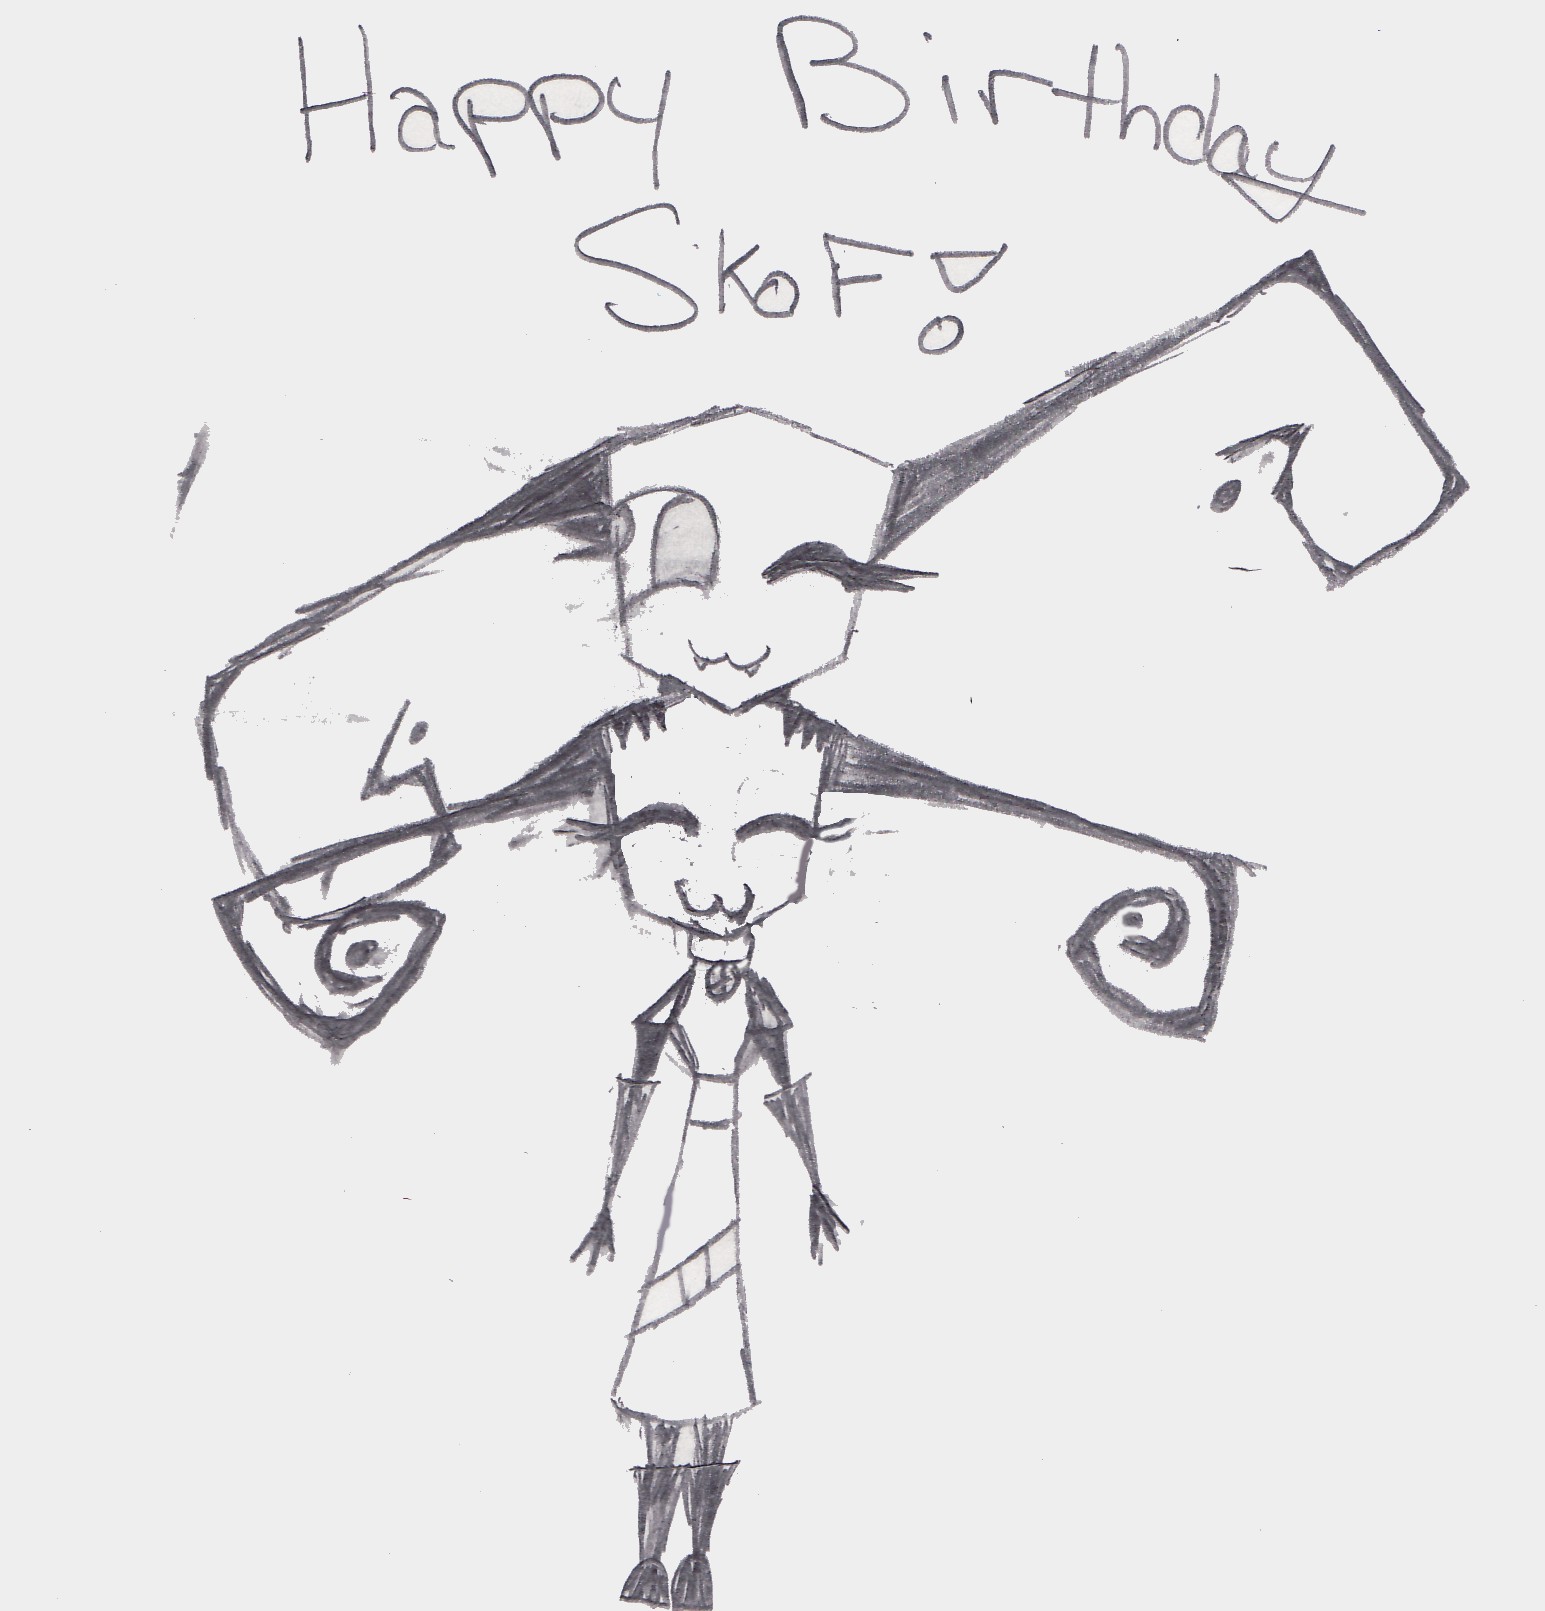 Happy Birthday SkoF by MangaObsessedLover4Ever